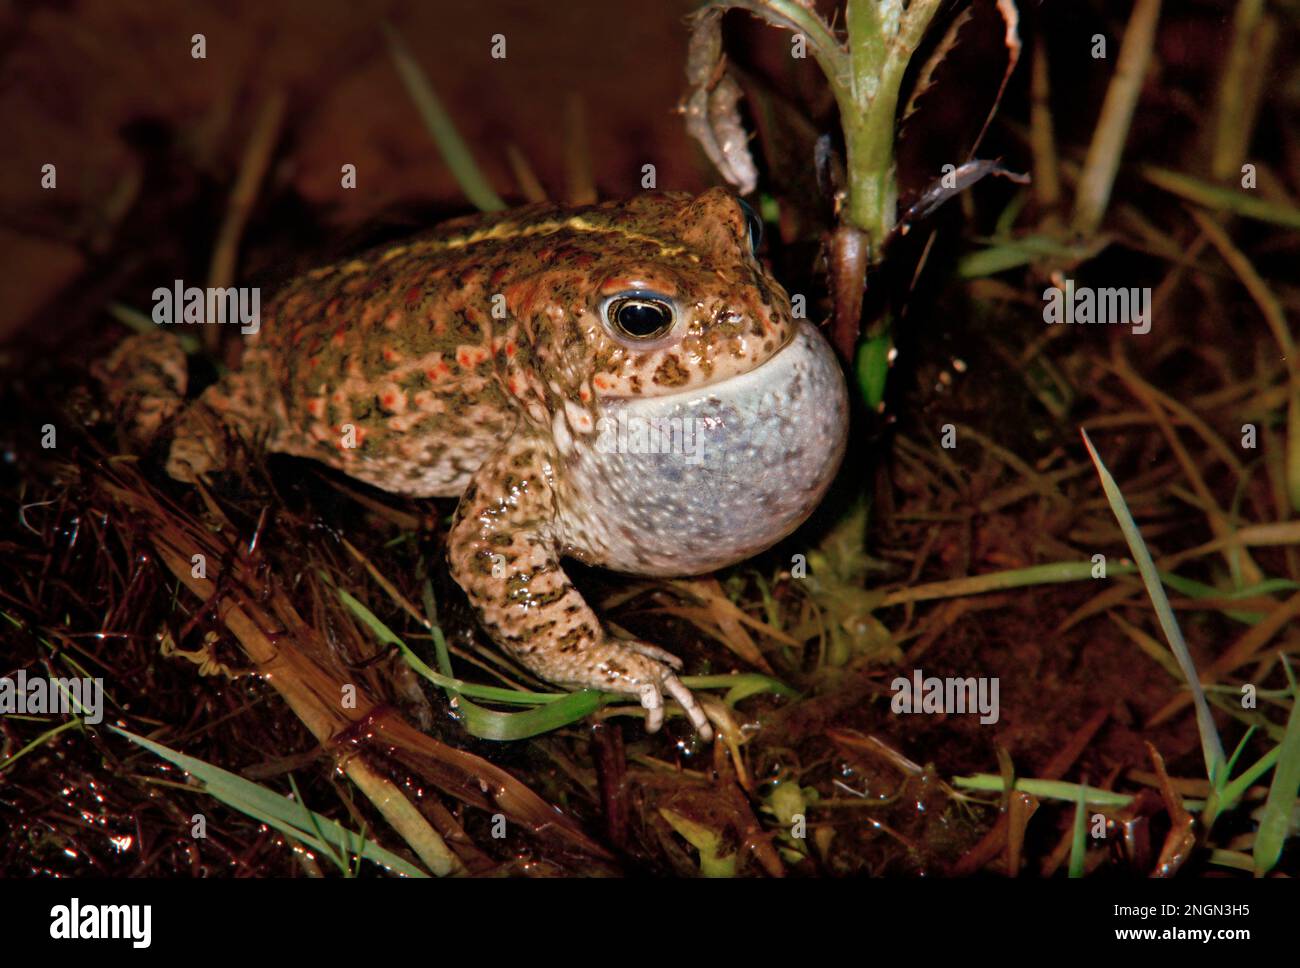 Natterjack toad, Epidalea calamita, formerly Bufo calamita. Mating season. Stock Photo